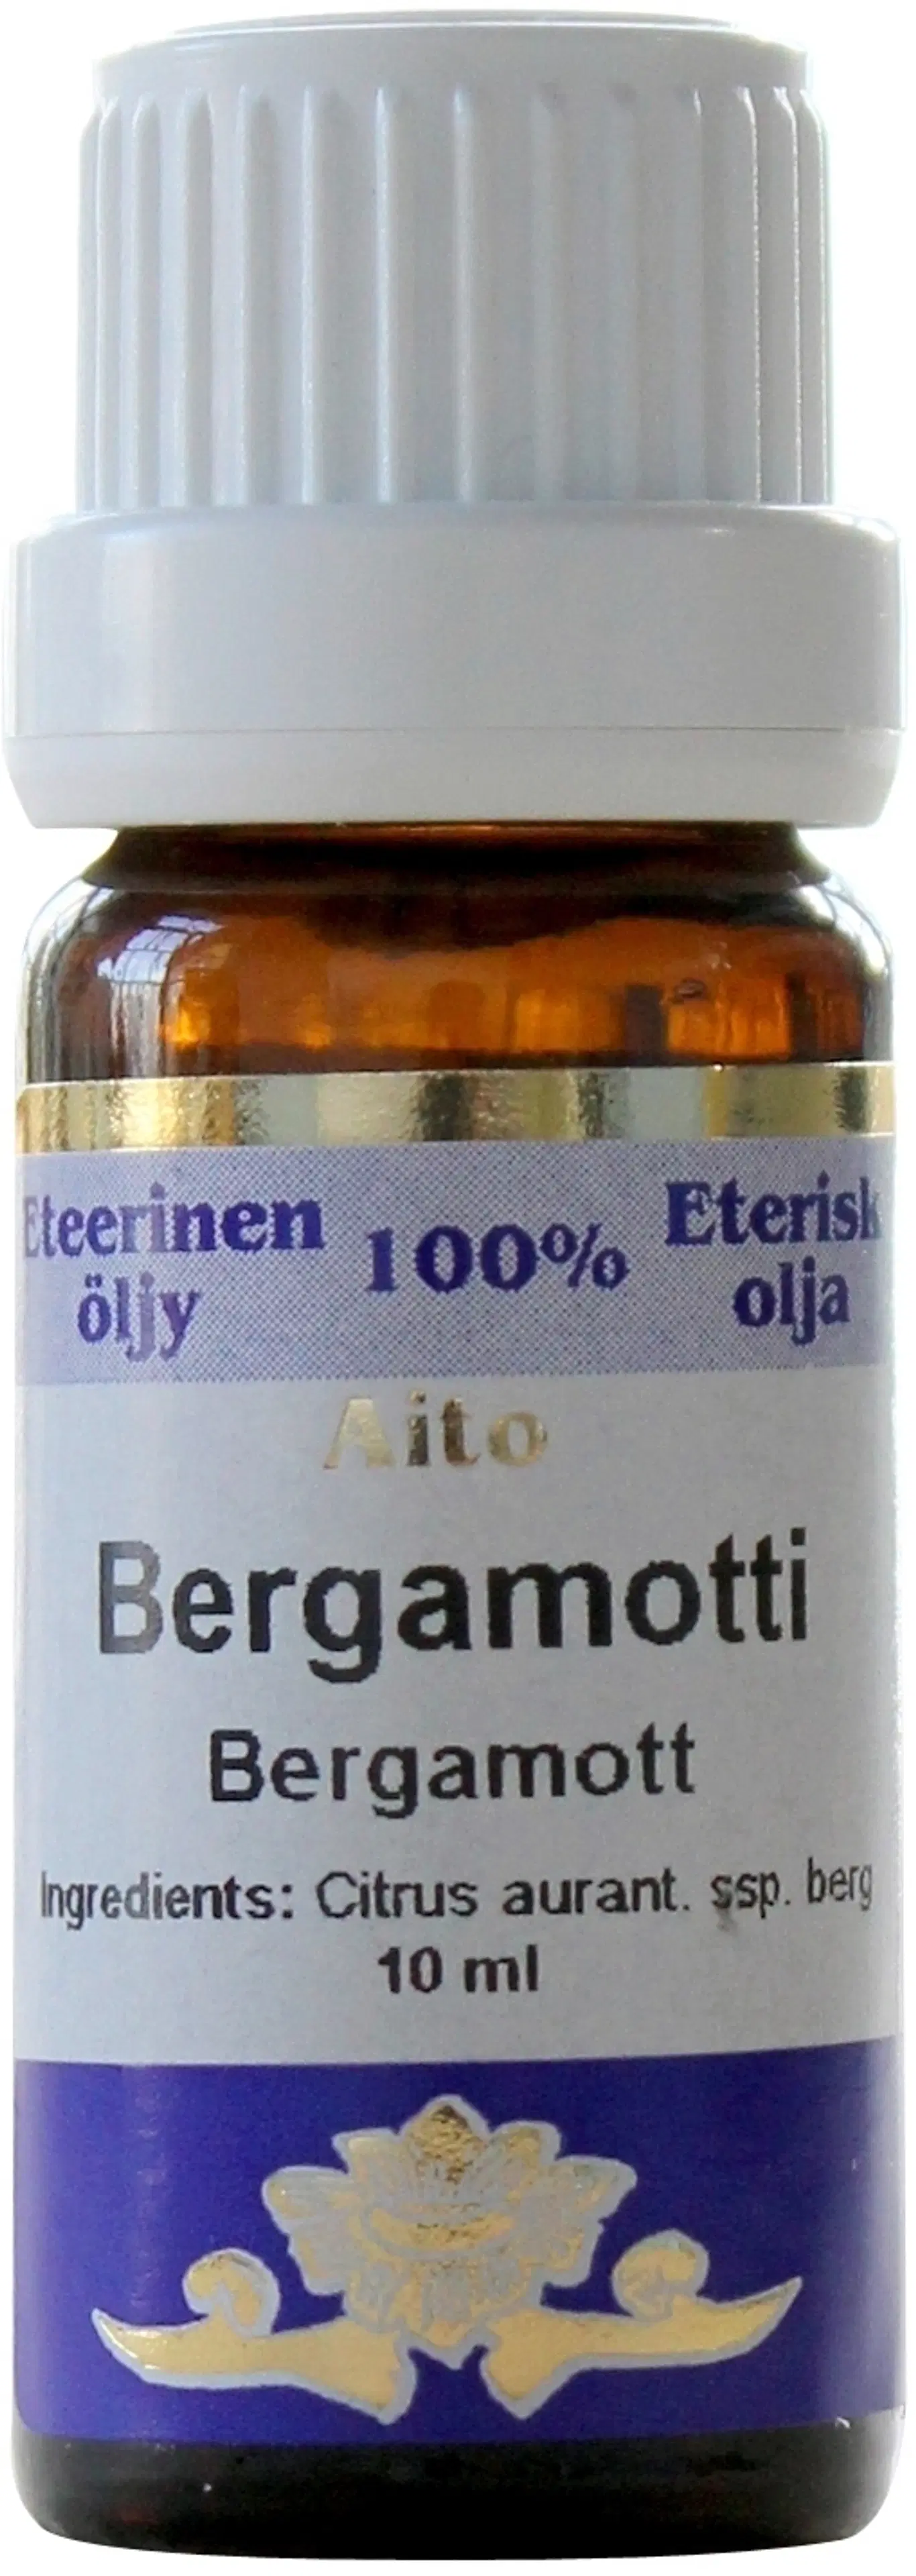 Frantsila 10 ml Bergamotti etteerinen öljy